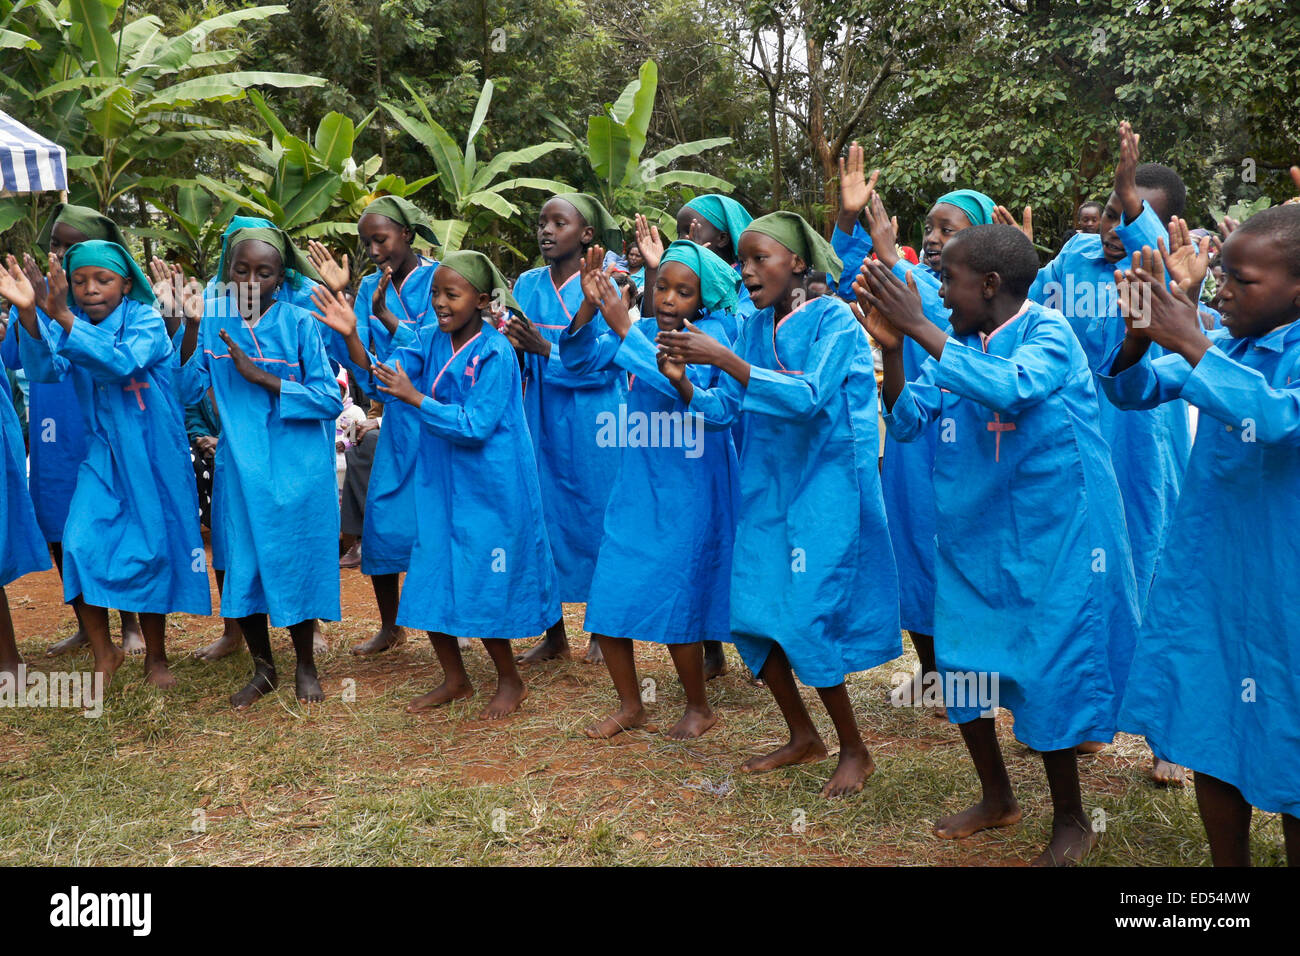 Kikuyu schoolchildren singing and dancing, Karatina, Kenya Stock Photo